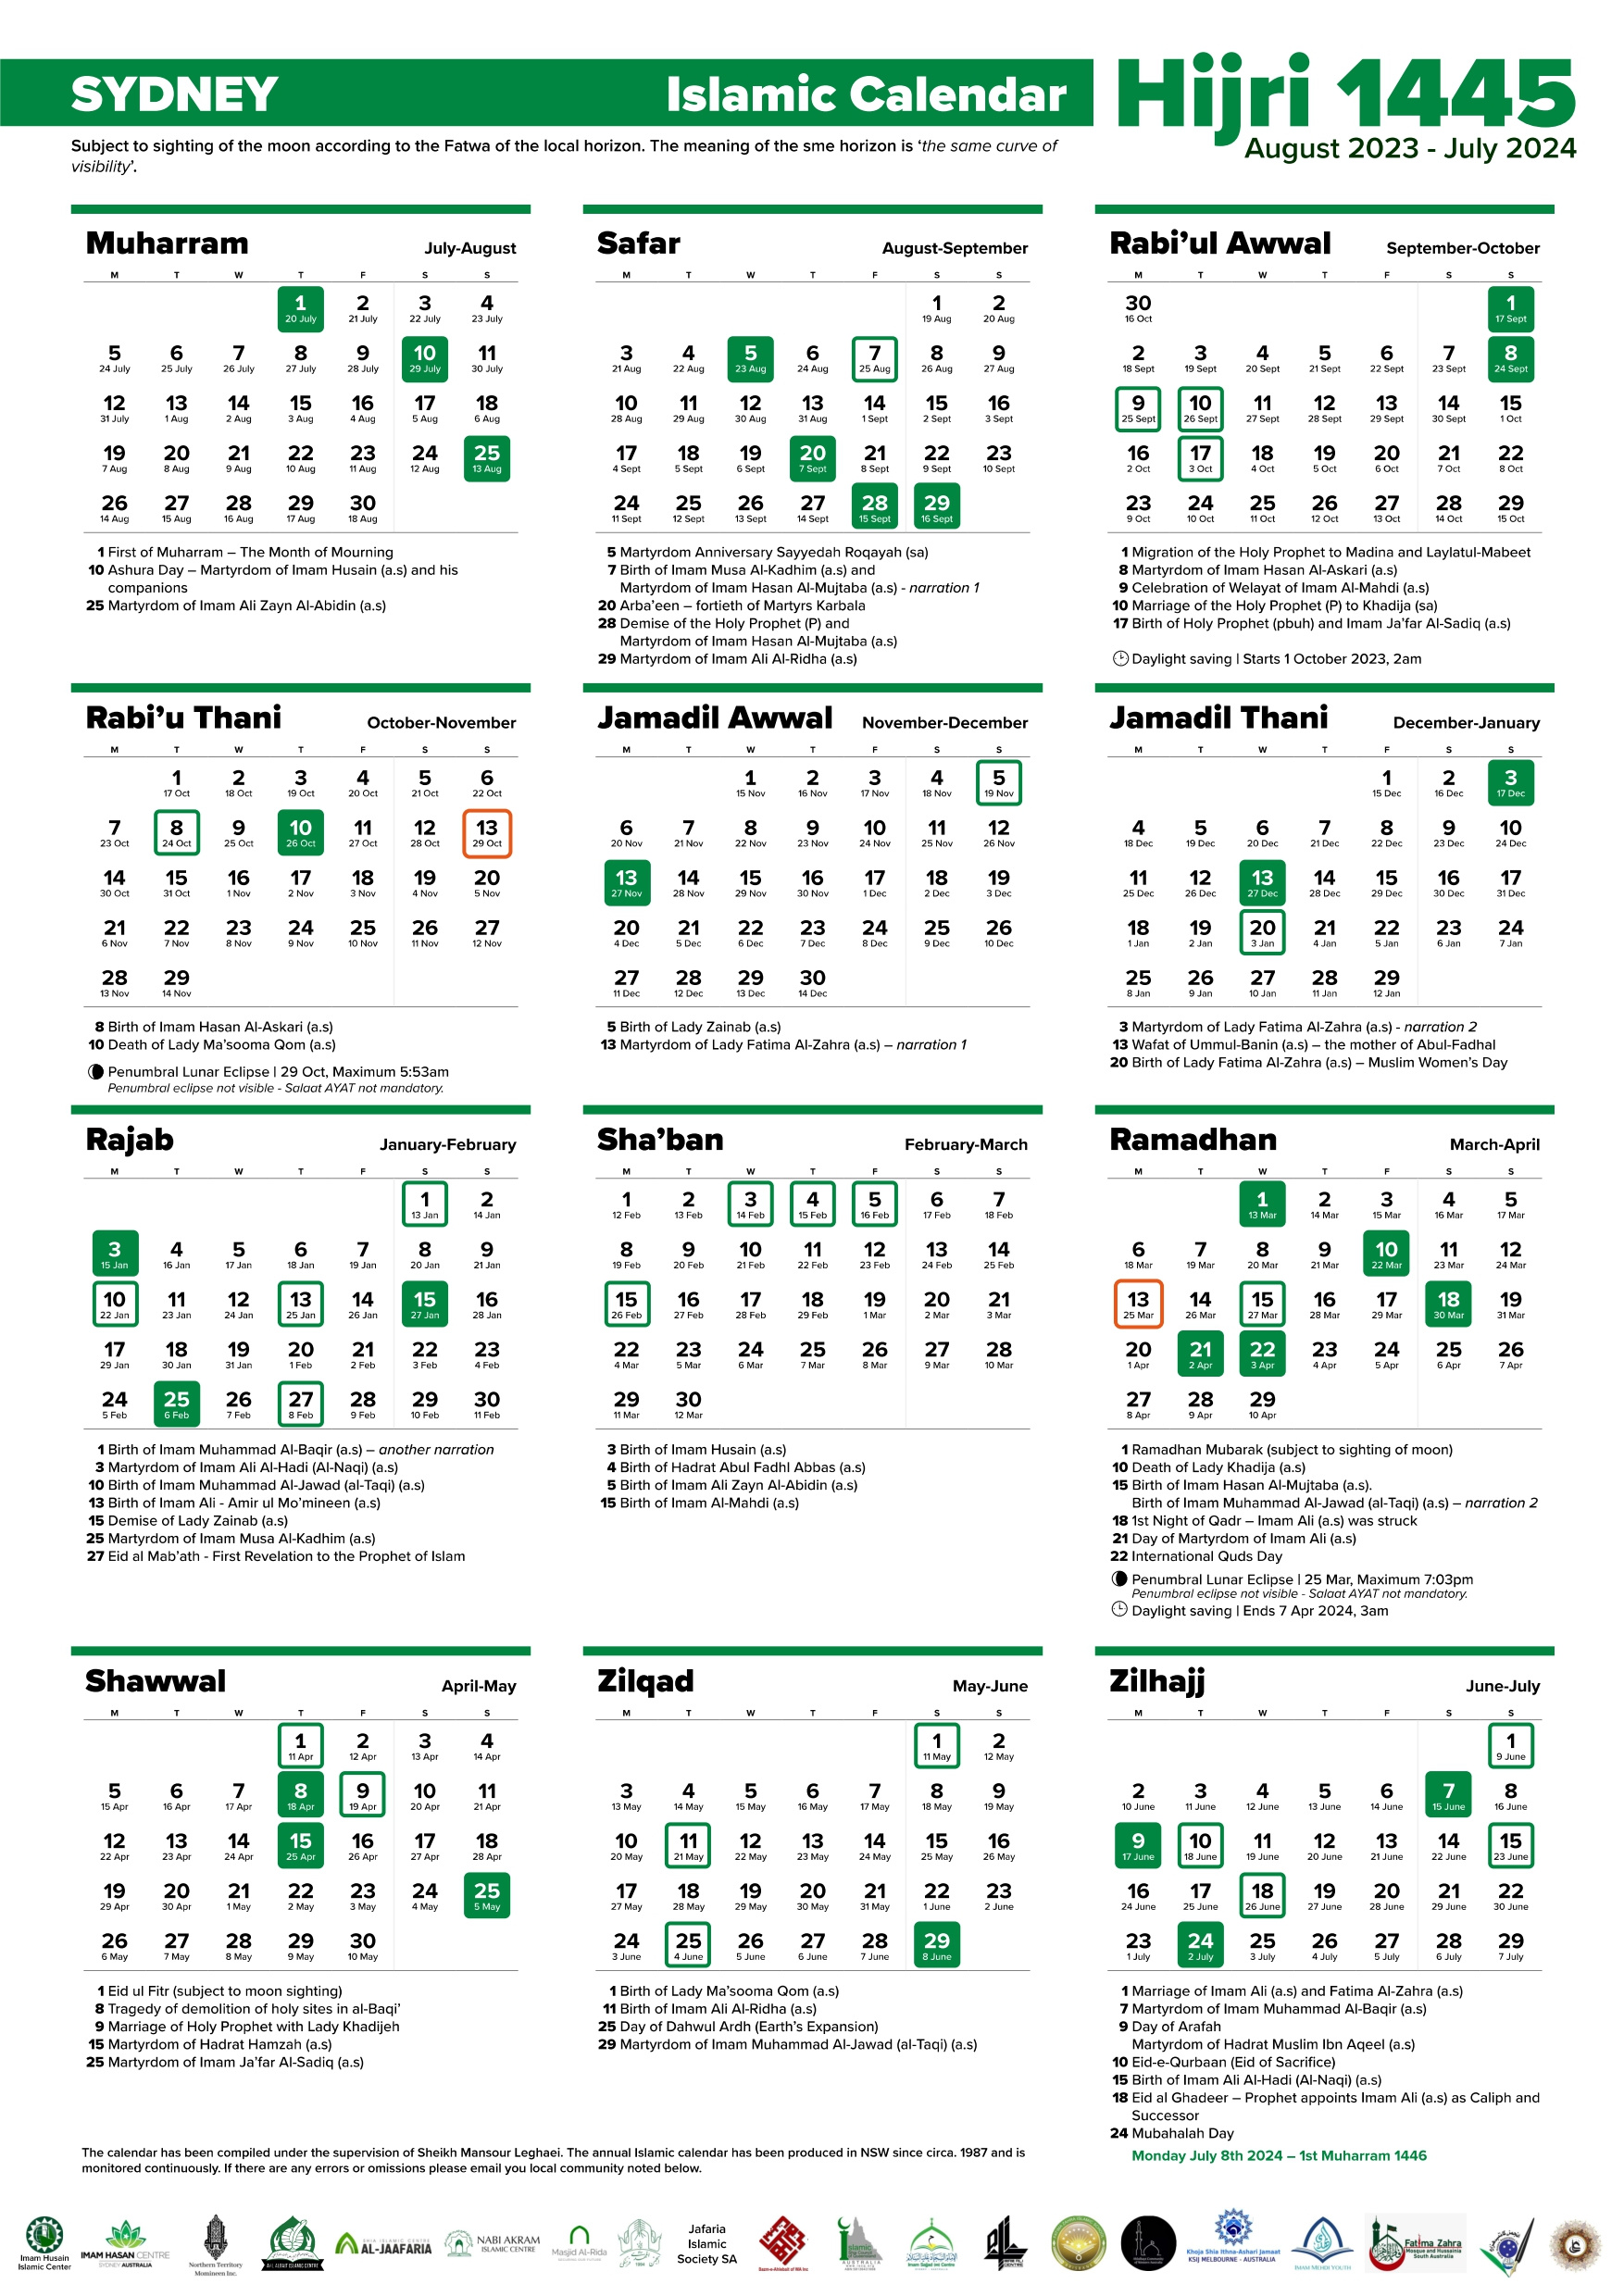 Annual Islamic Calendar 1445 Ah / 2023-2024 Ad – Imam Husain for 17 July 2024 in Islamic Calendar